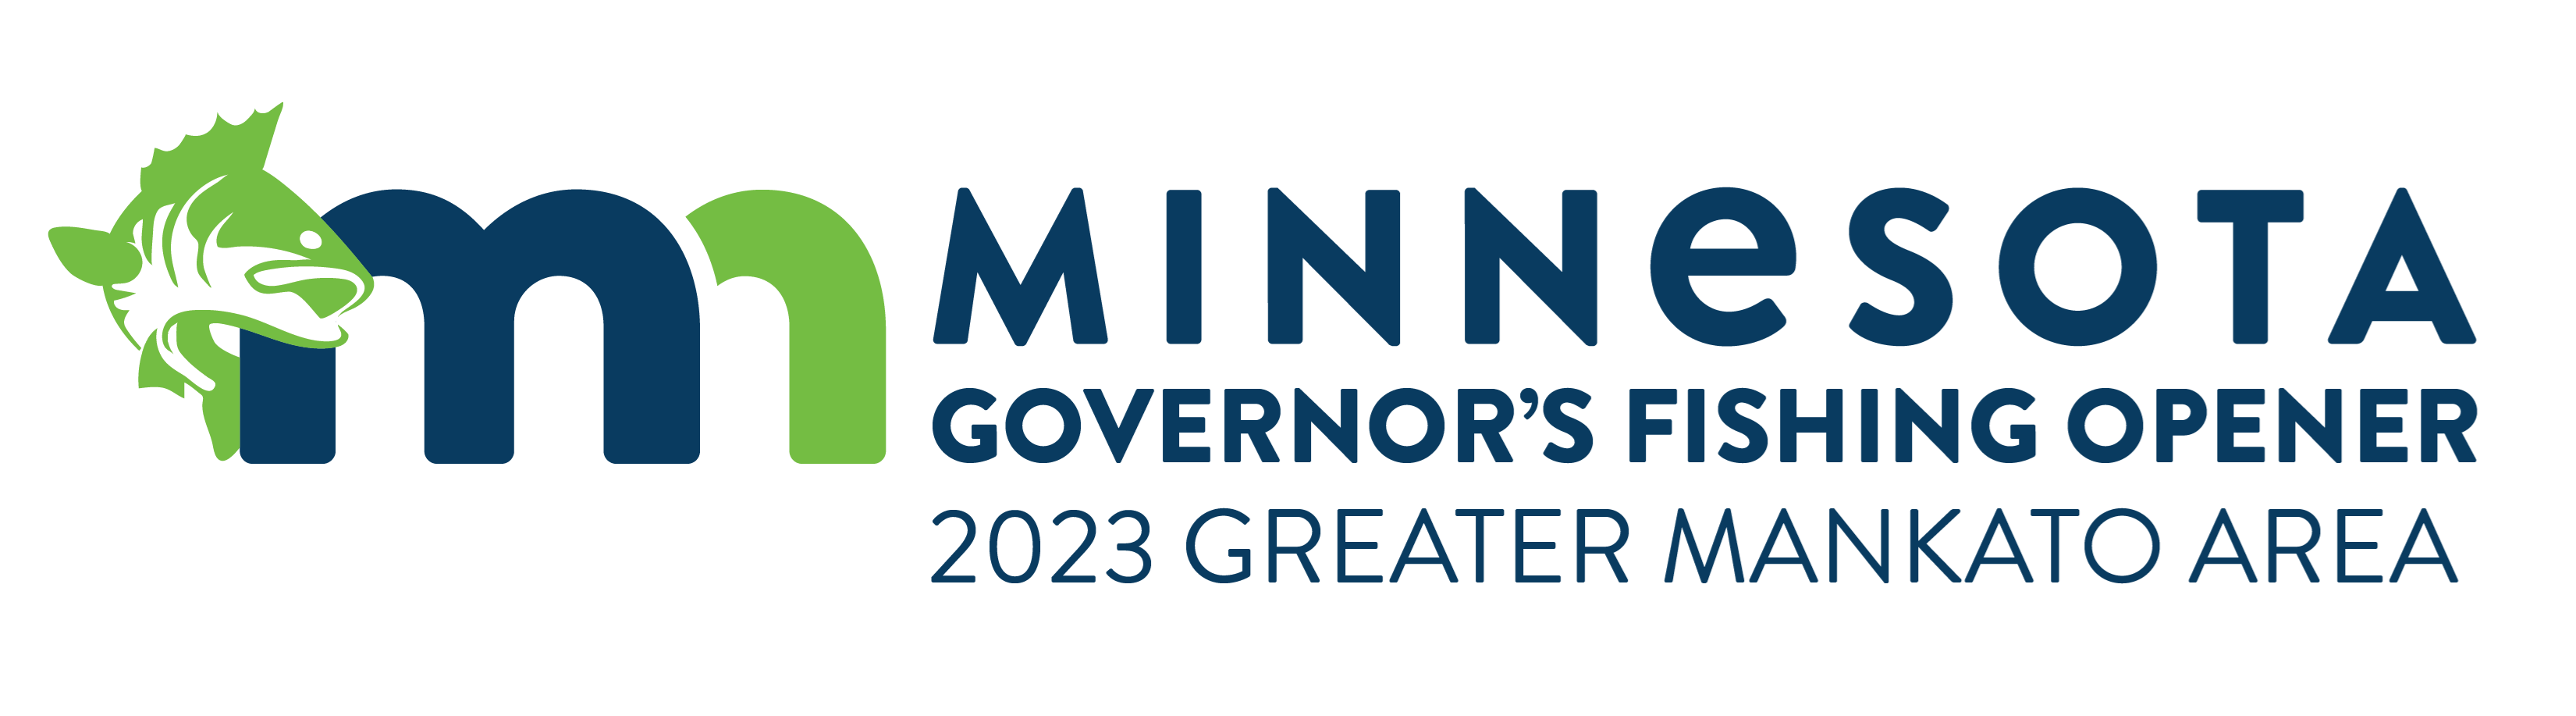 2023 Minnesota Governor's Fishing Opener